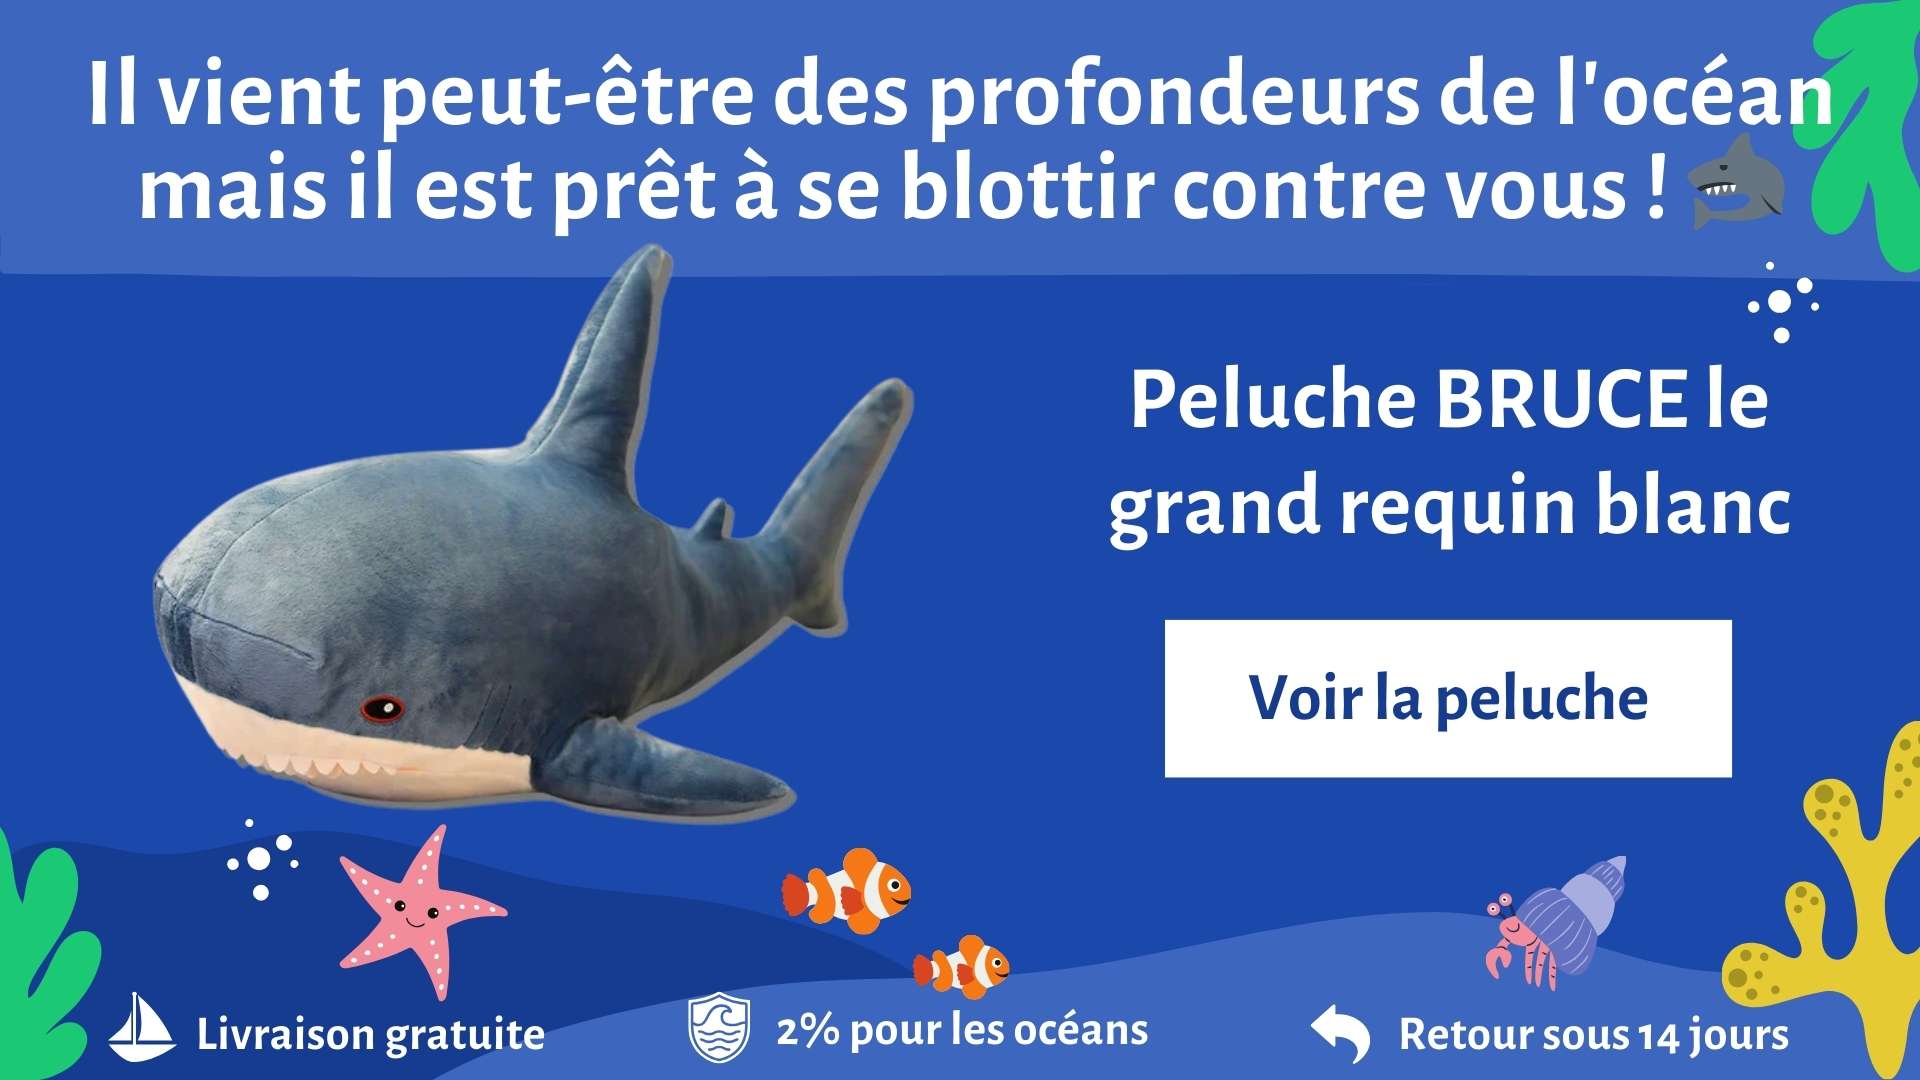 https://mer-aux-tresors.com/products/peluche-bruce-le-grand-requin-blanc